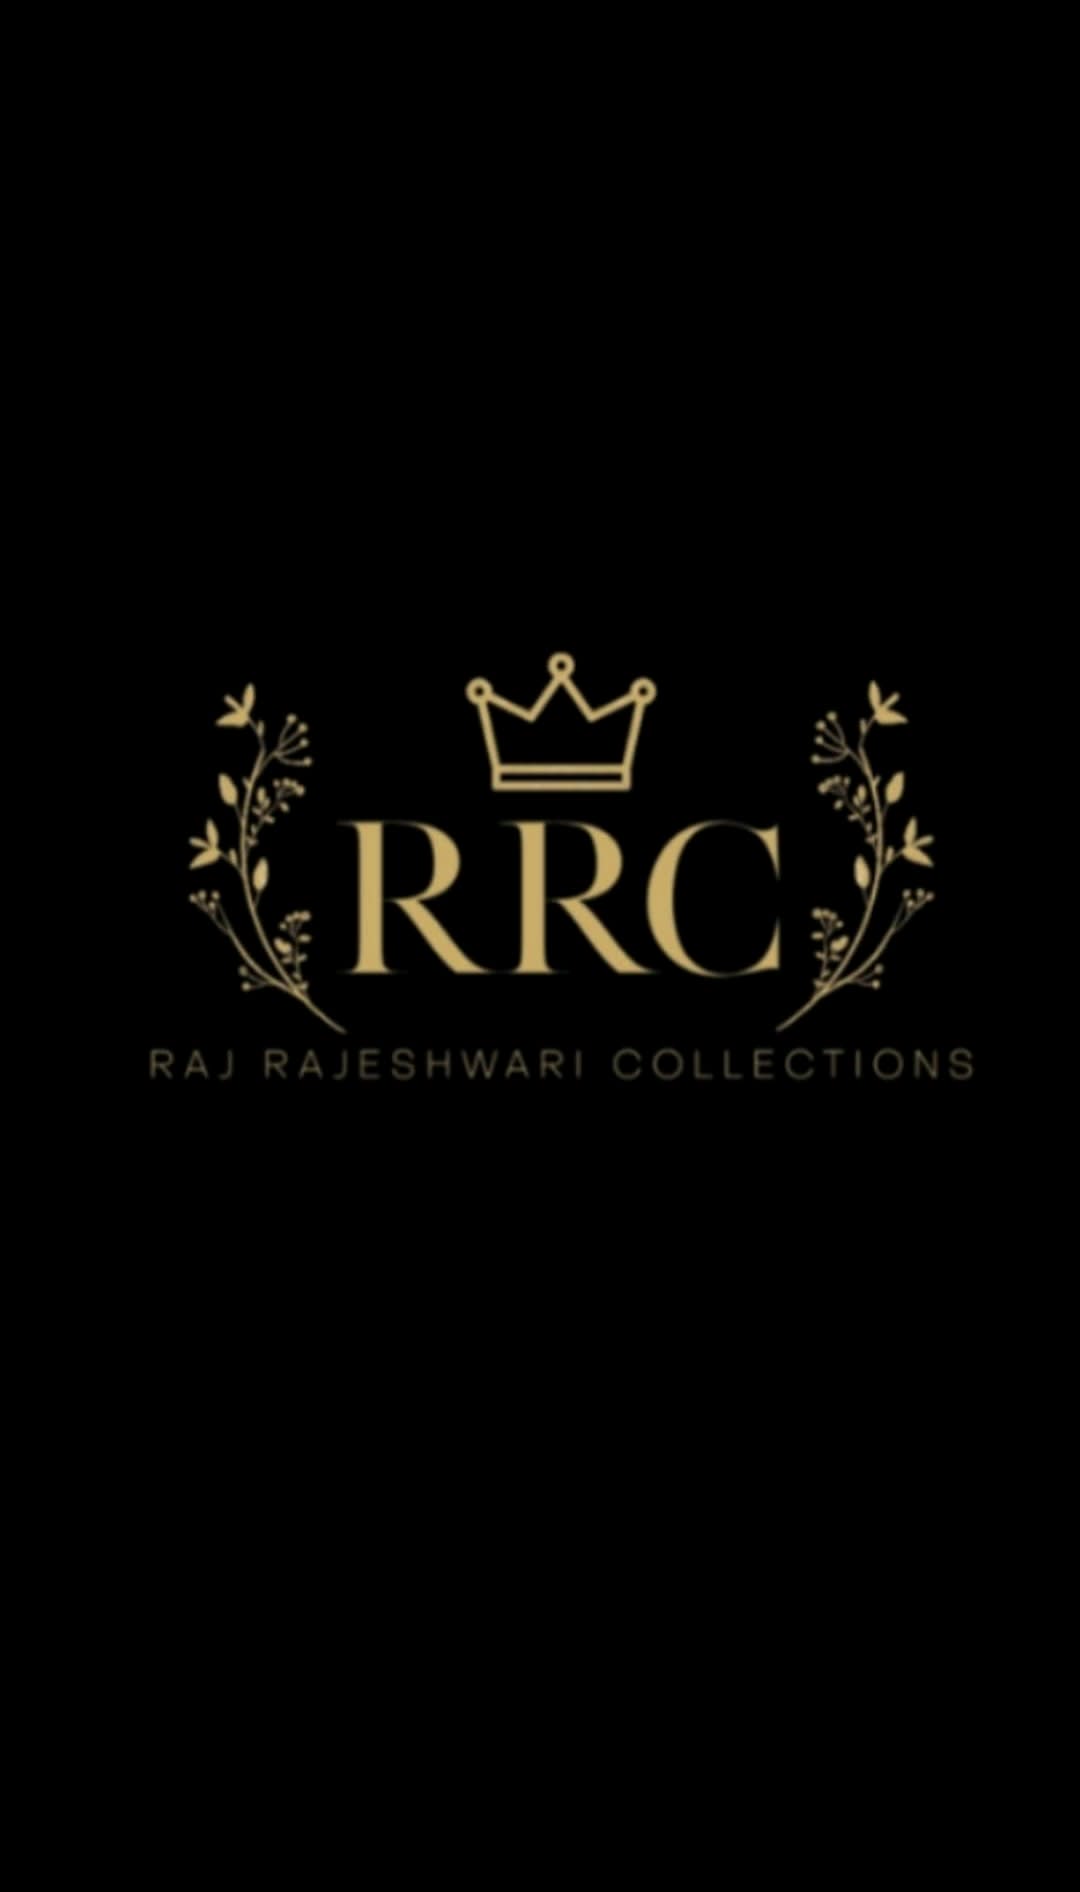 Raj Rajeshwari Collections